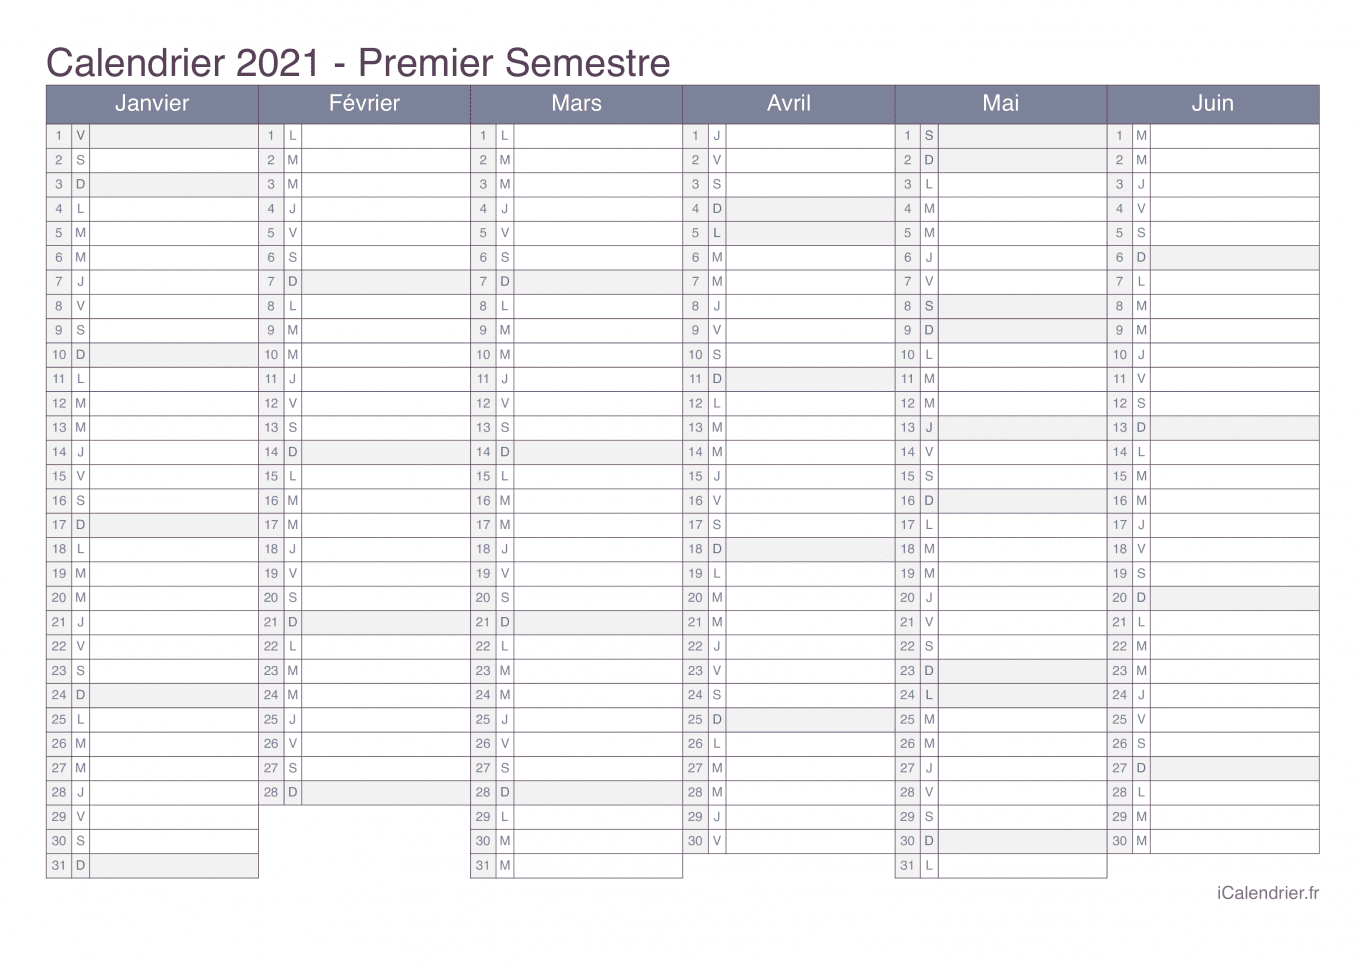 Calendrier par semestre 2021 - Office